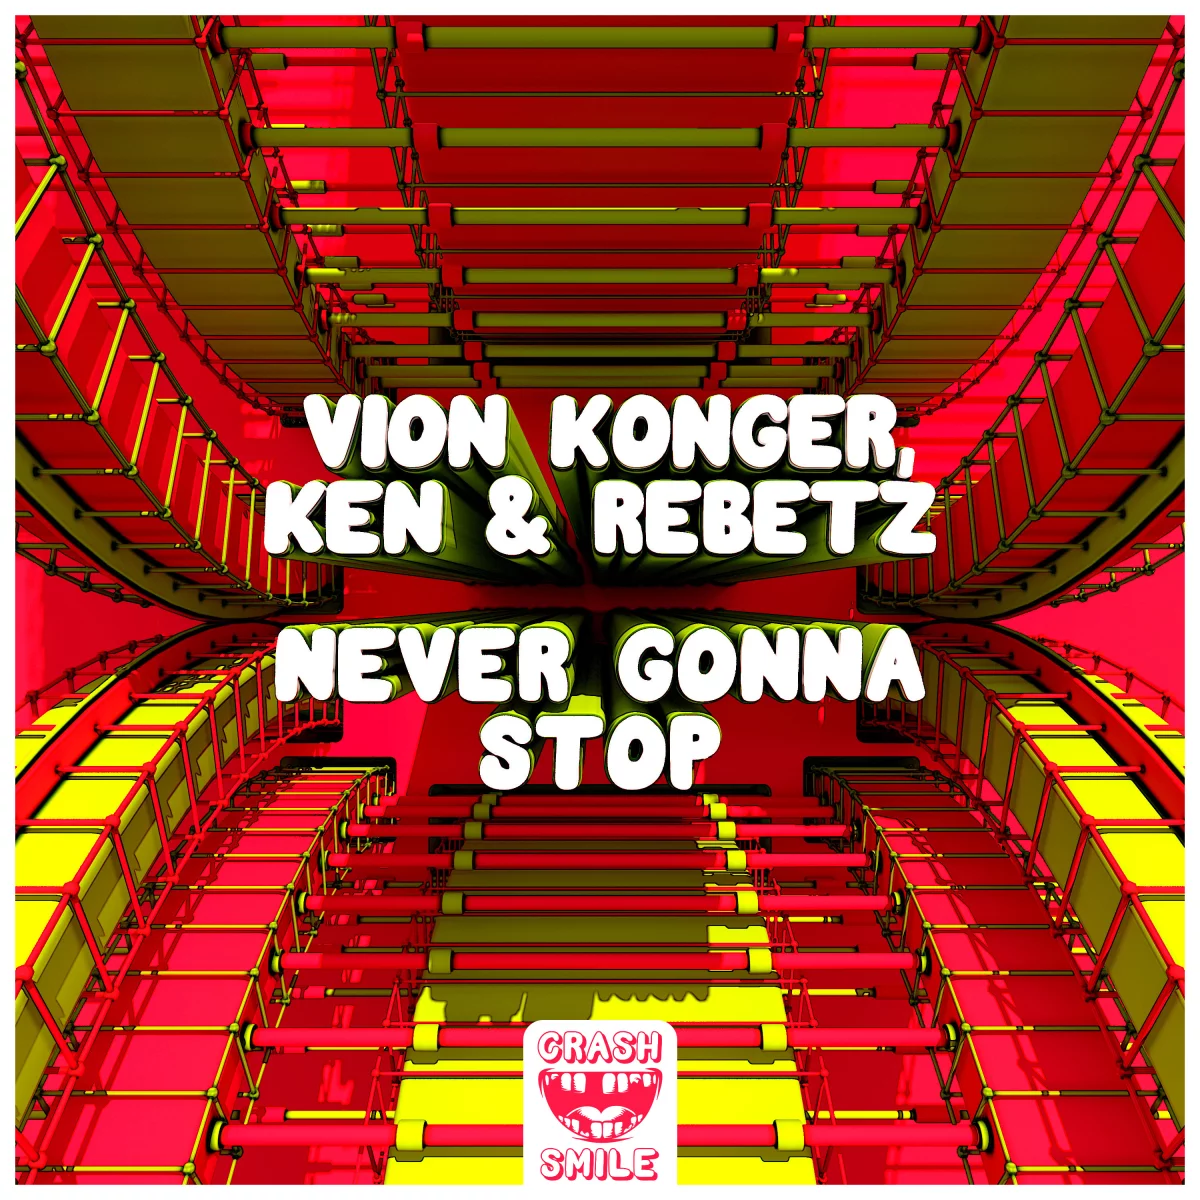 Never Gonna Stop - Vion Konger⁠, Ken⁠ & Rebetz⁠ 